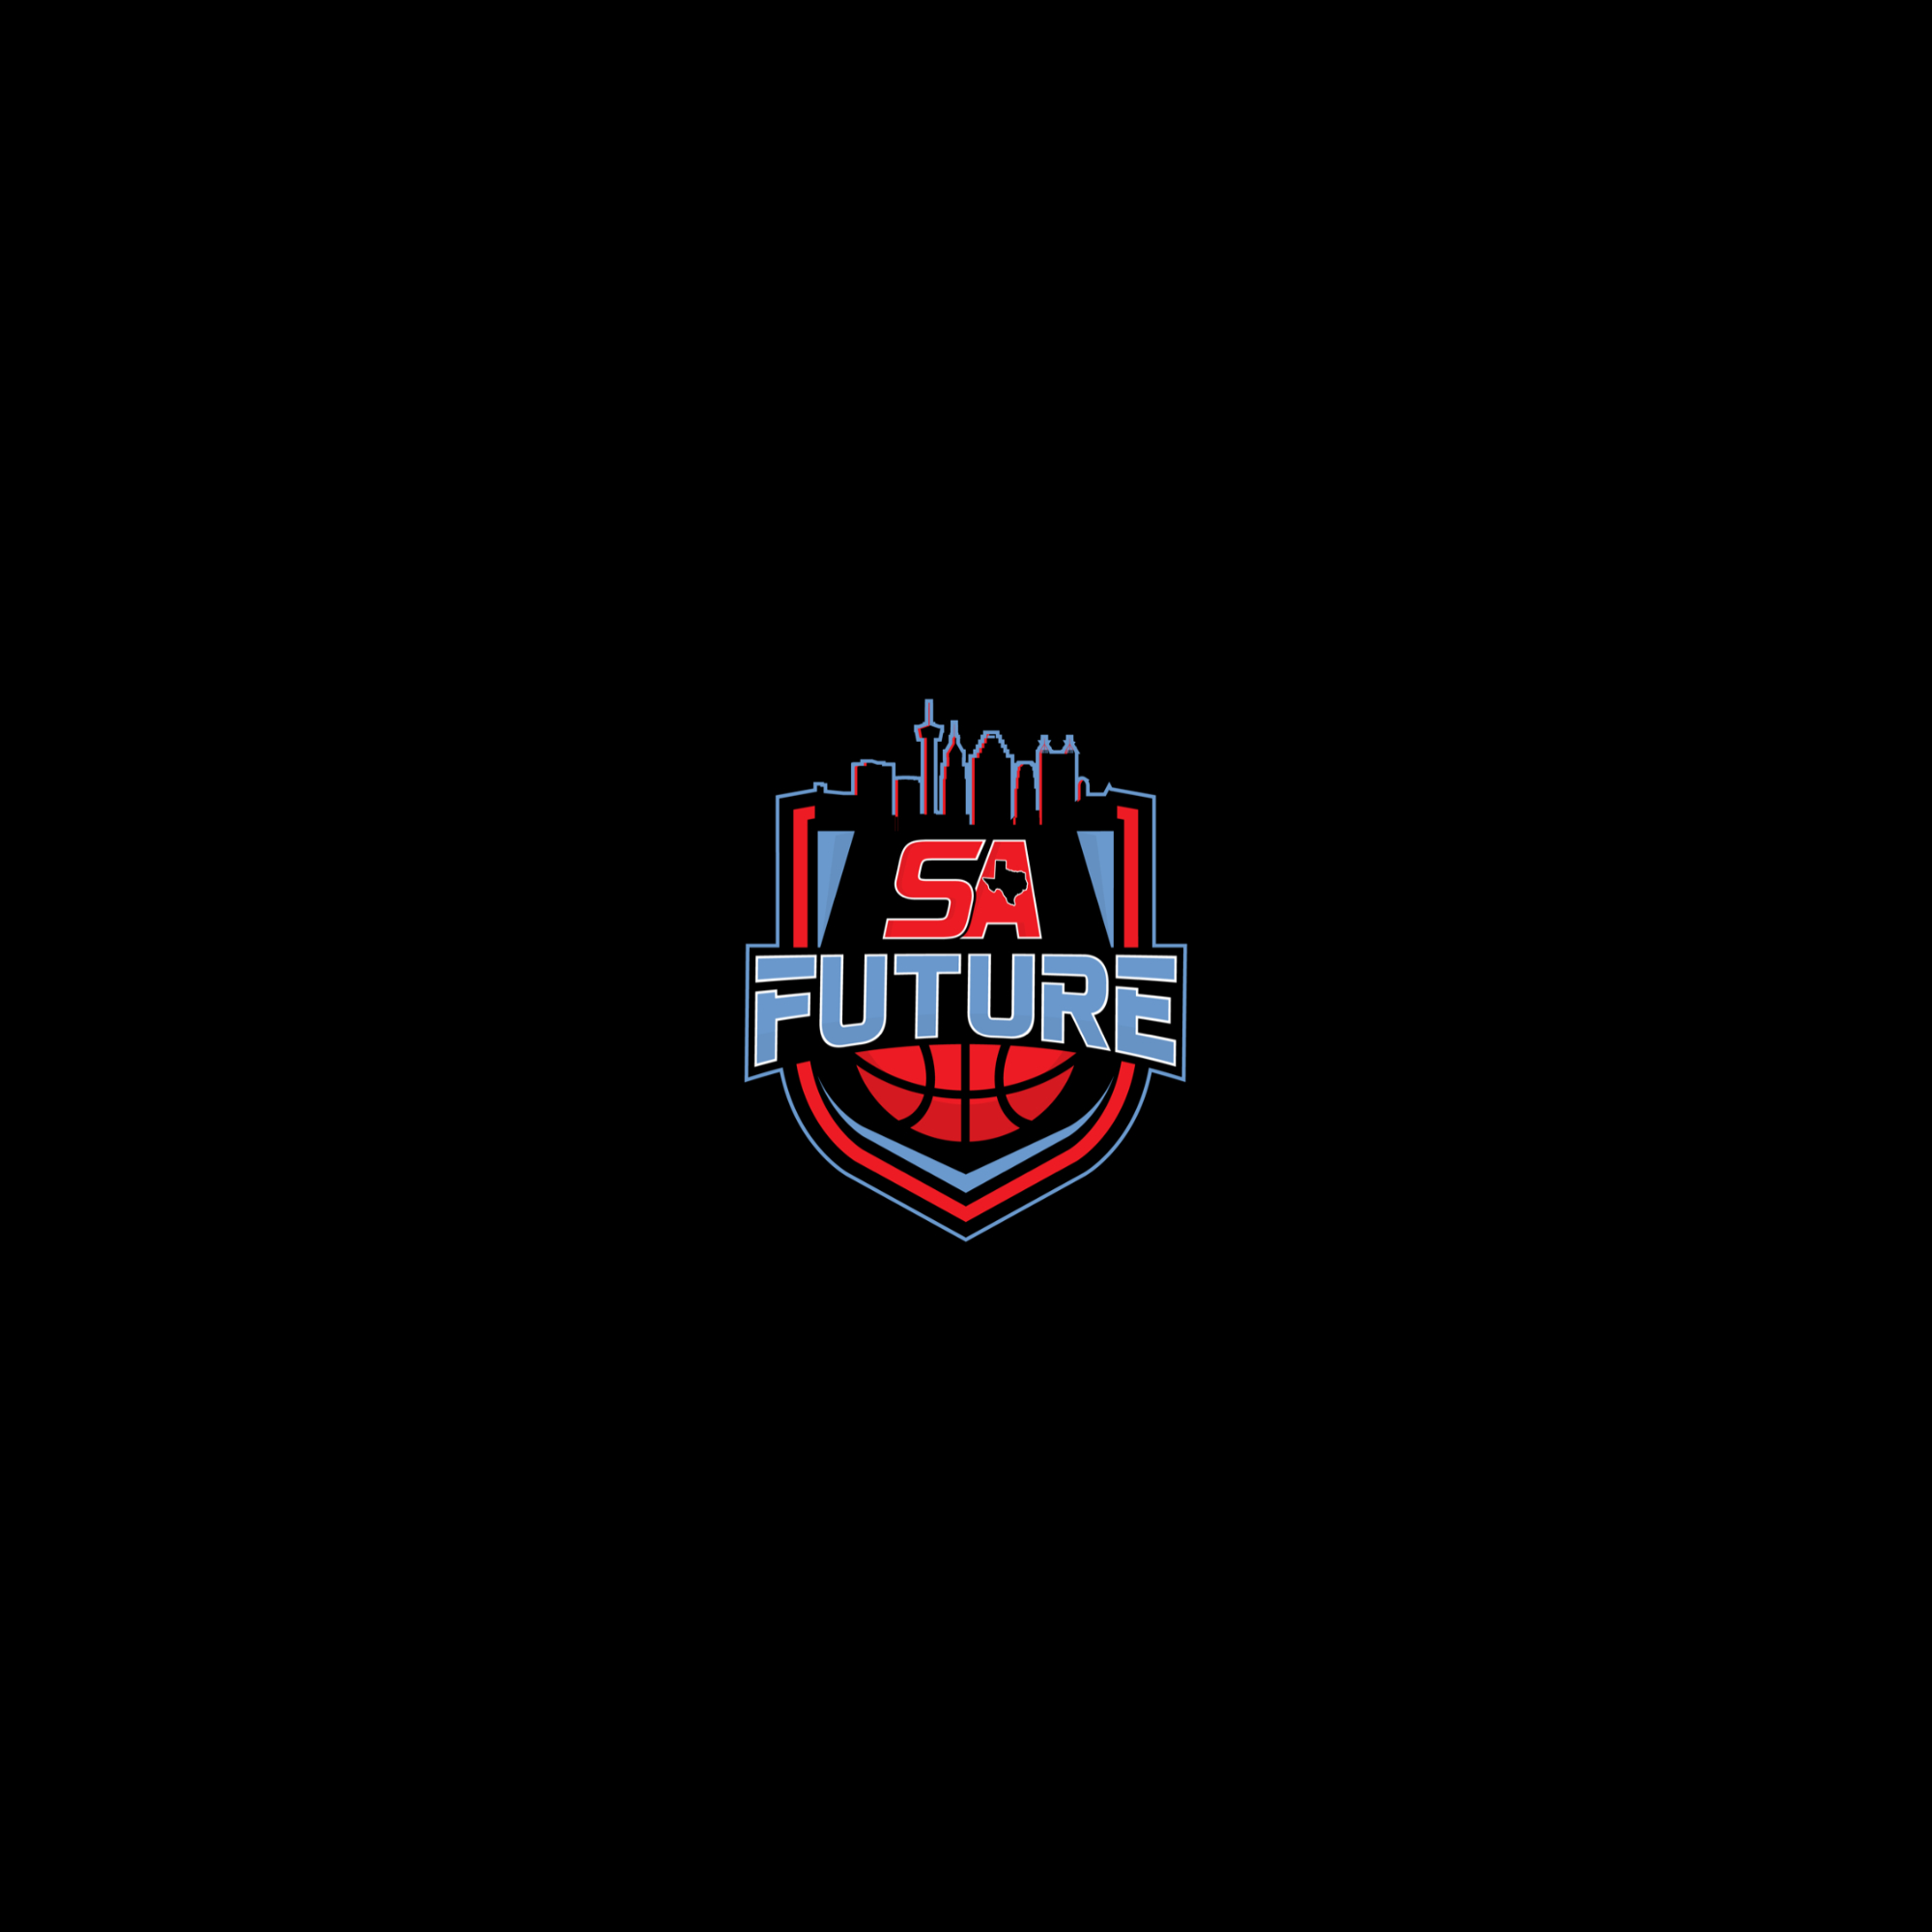 The official logo of SA Future